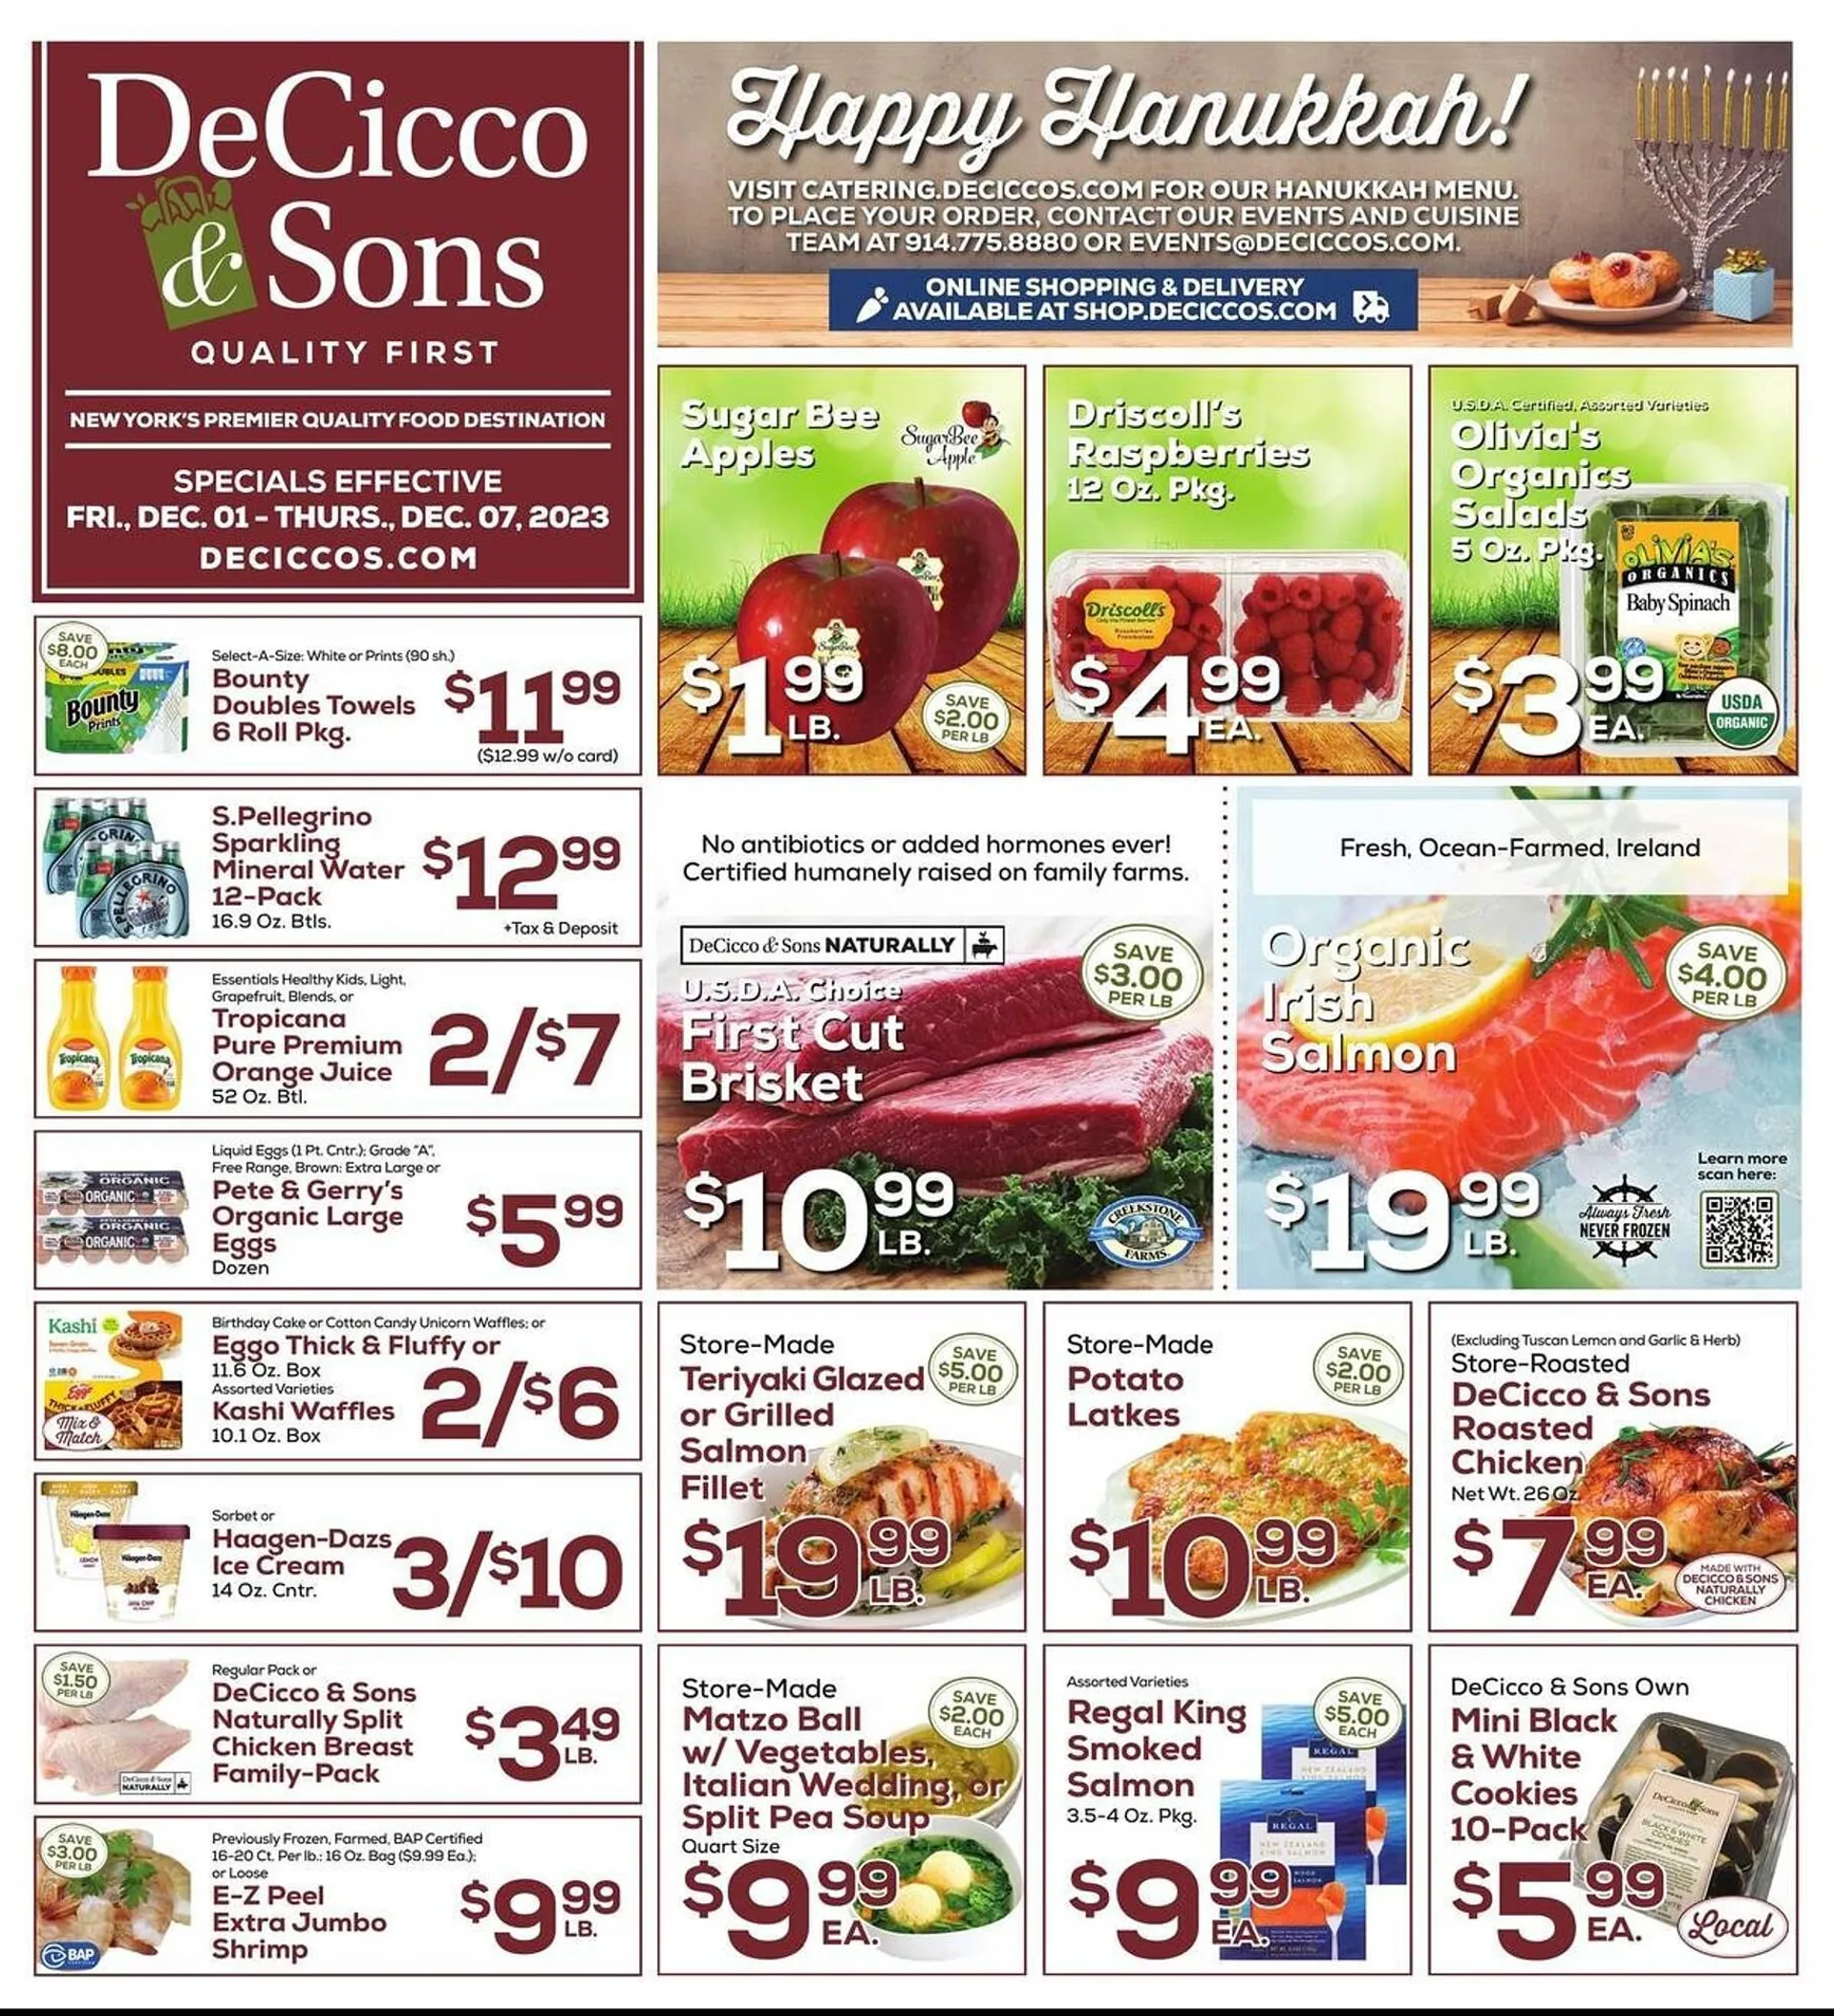 DeCicco & Sons Weekly Ad - 1